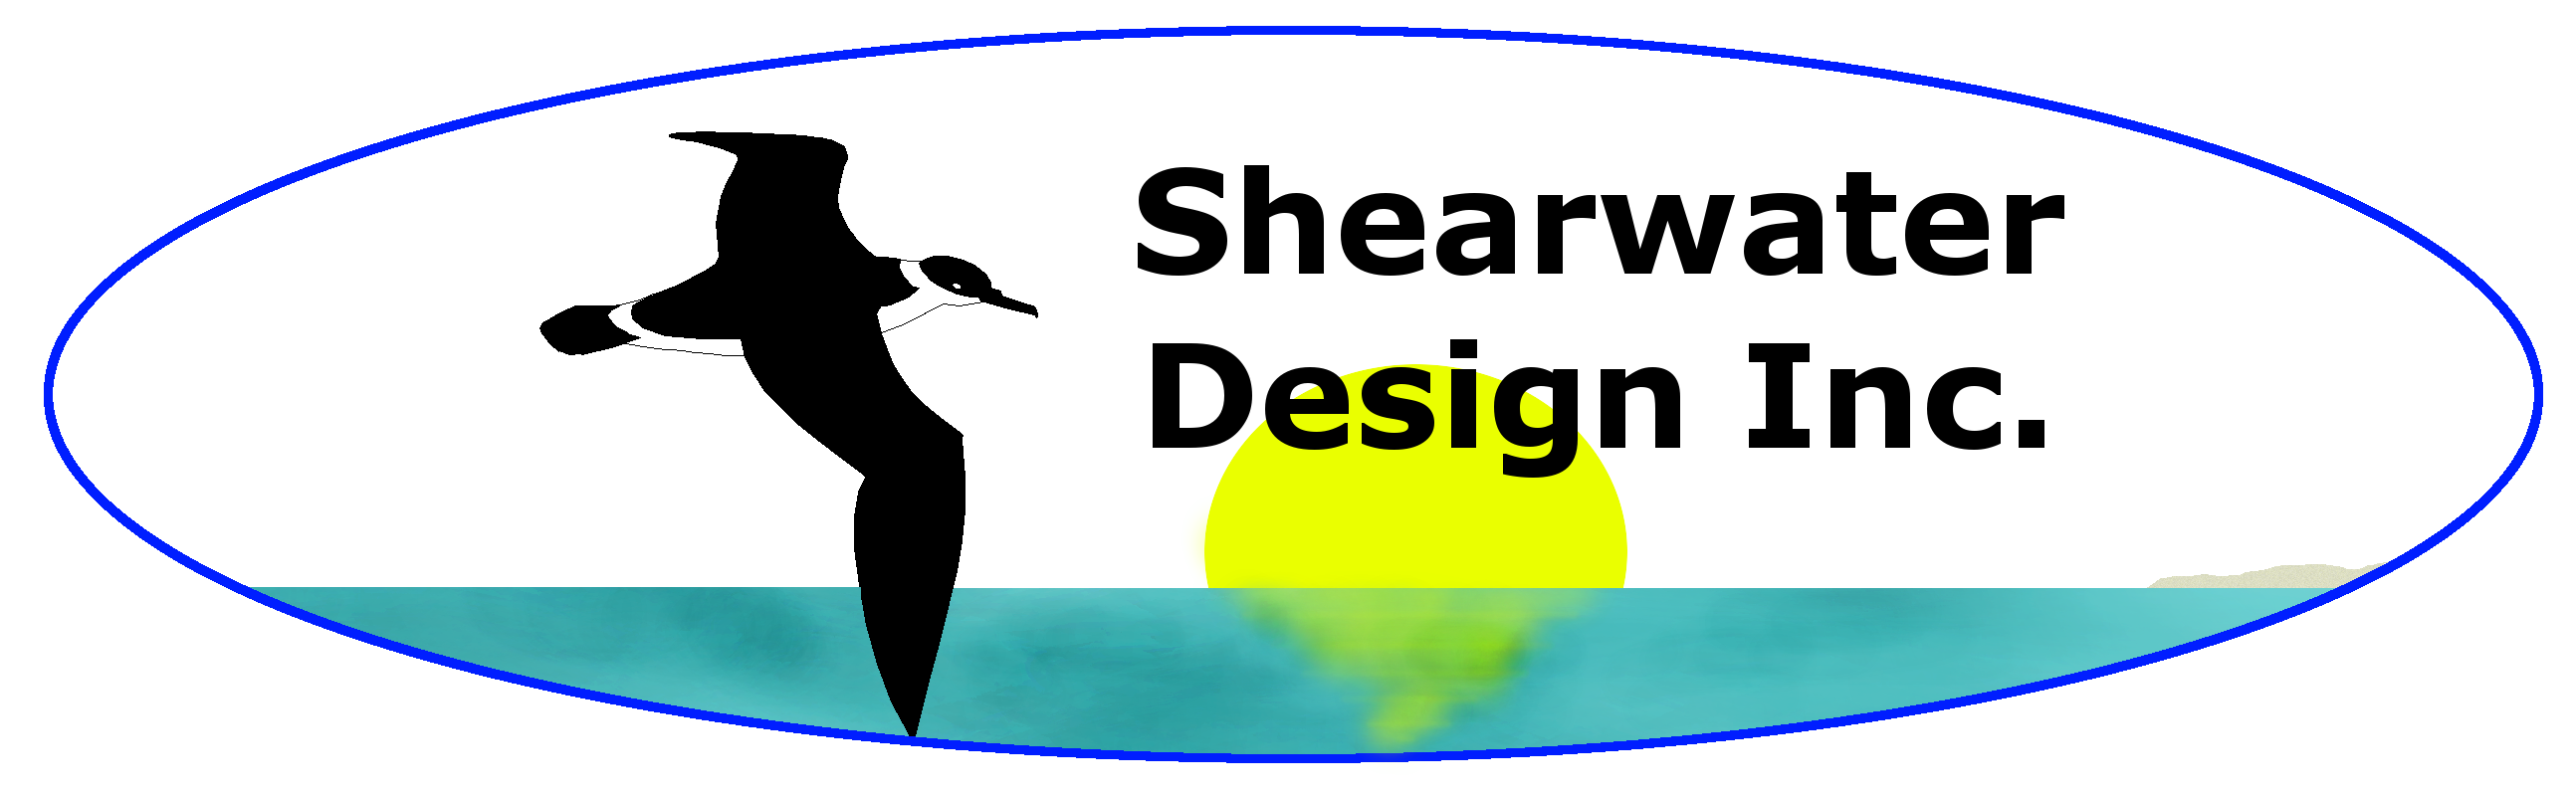 Shearwater Design Inc.